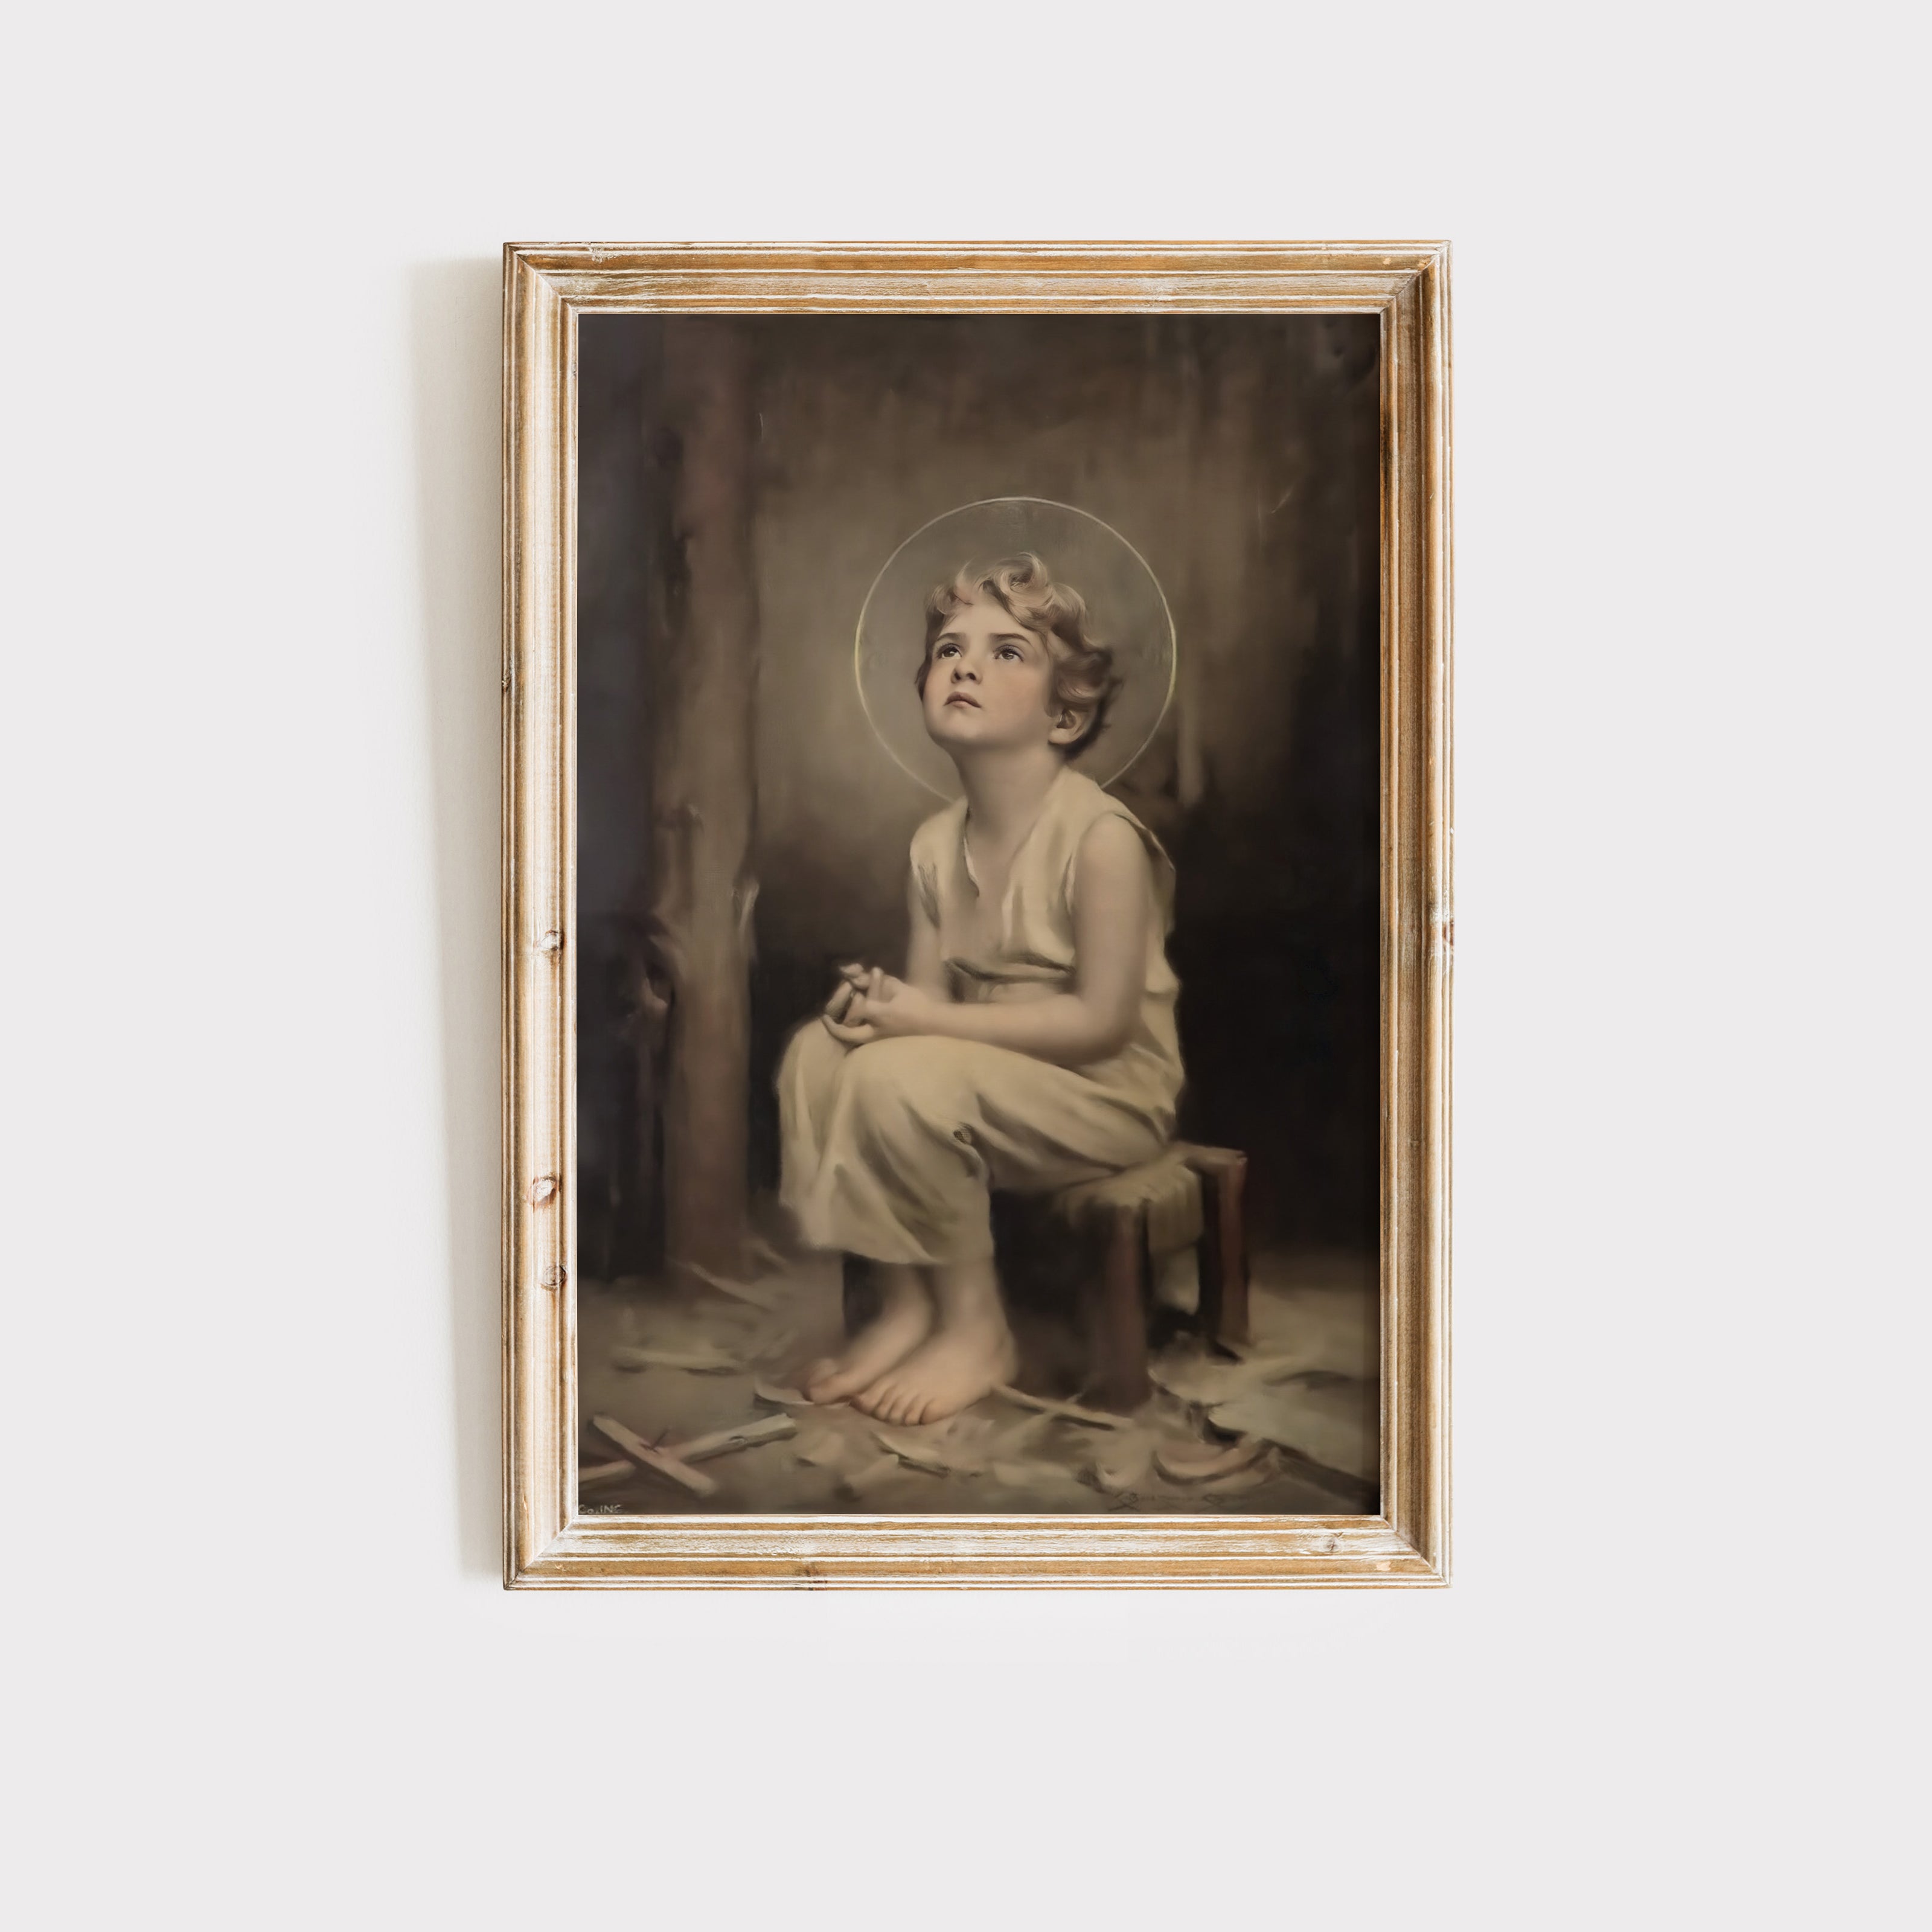 Christ at Five, "Divine Innocence" Art Print (C Bosseron Chambers)